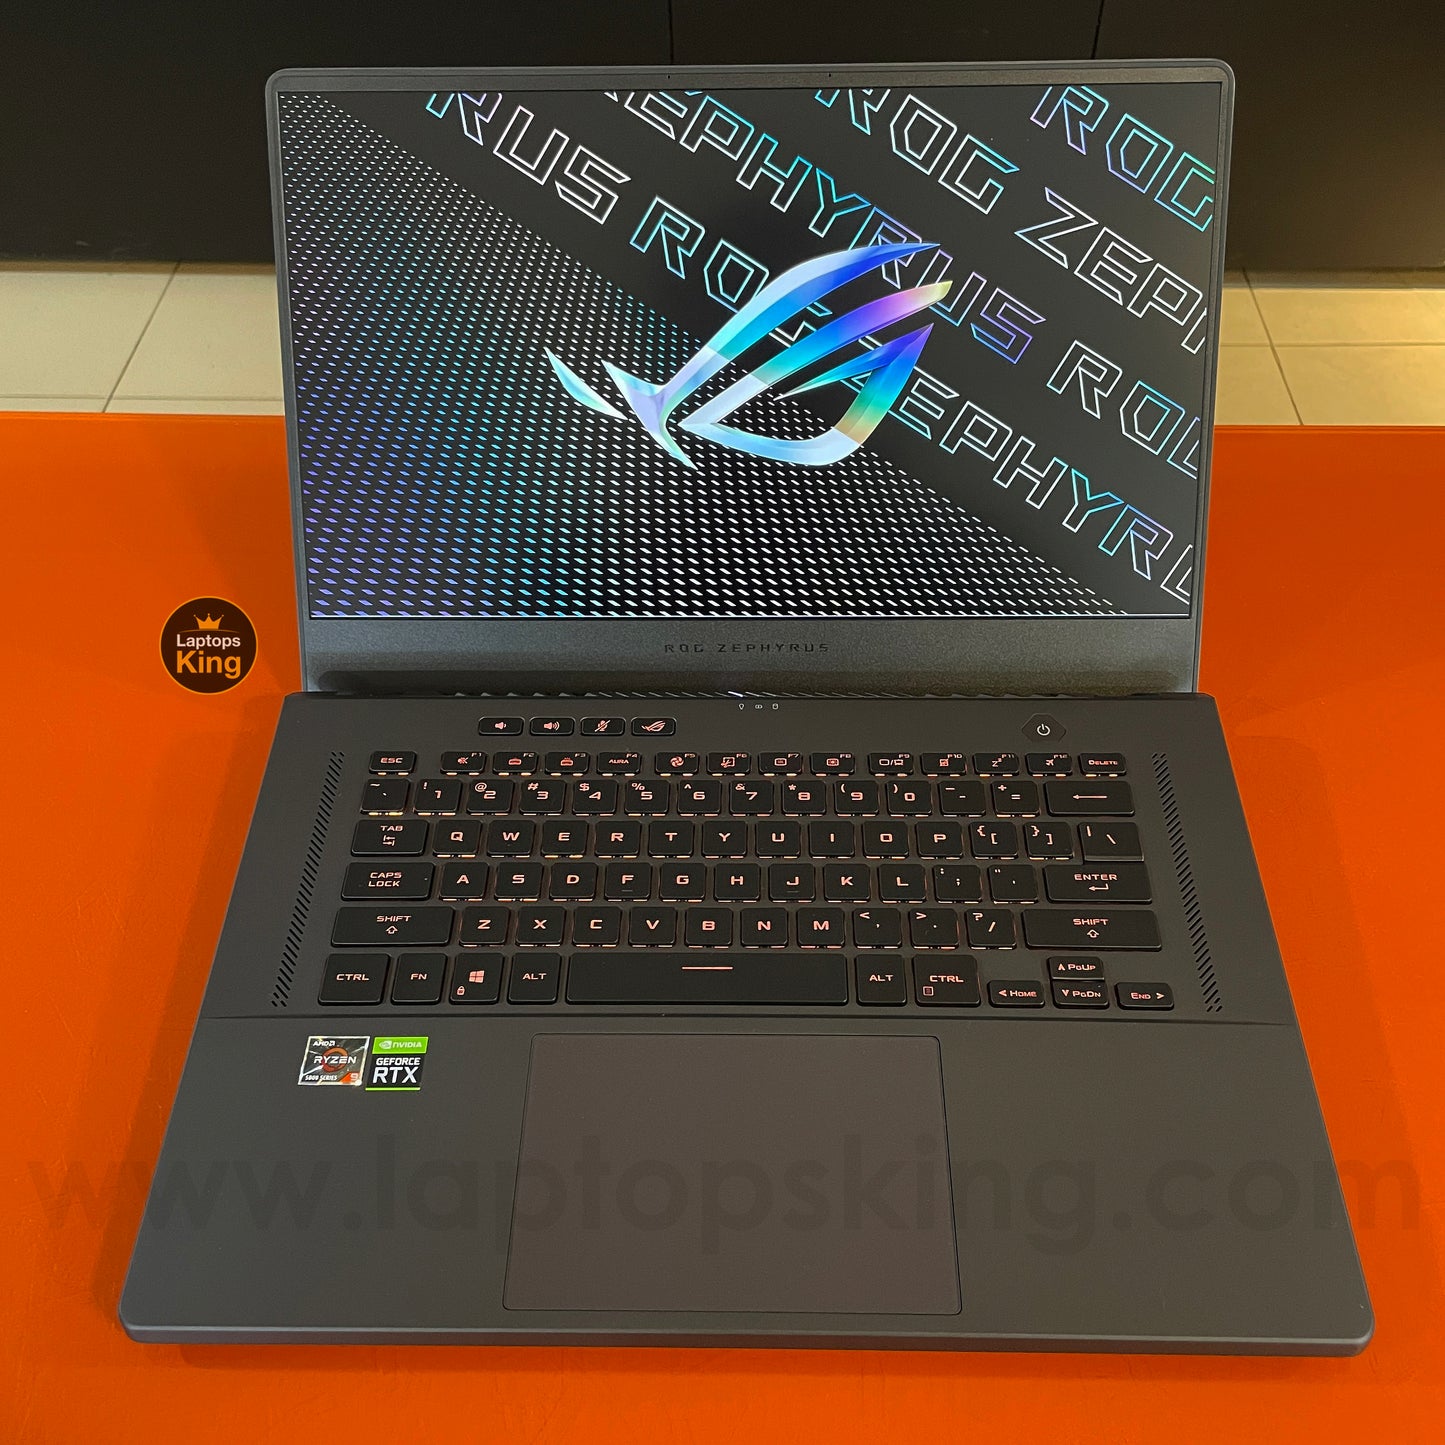 Asus Rog Zephyrus G15 GA503QS-BS96Q Ryzen 9 5900hs Rtx 3080 165hz Qhd Gaming Laptop Offers (Brand New)